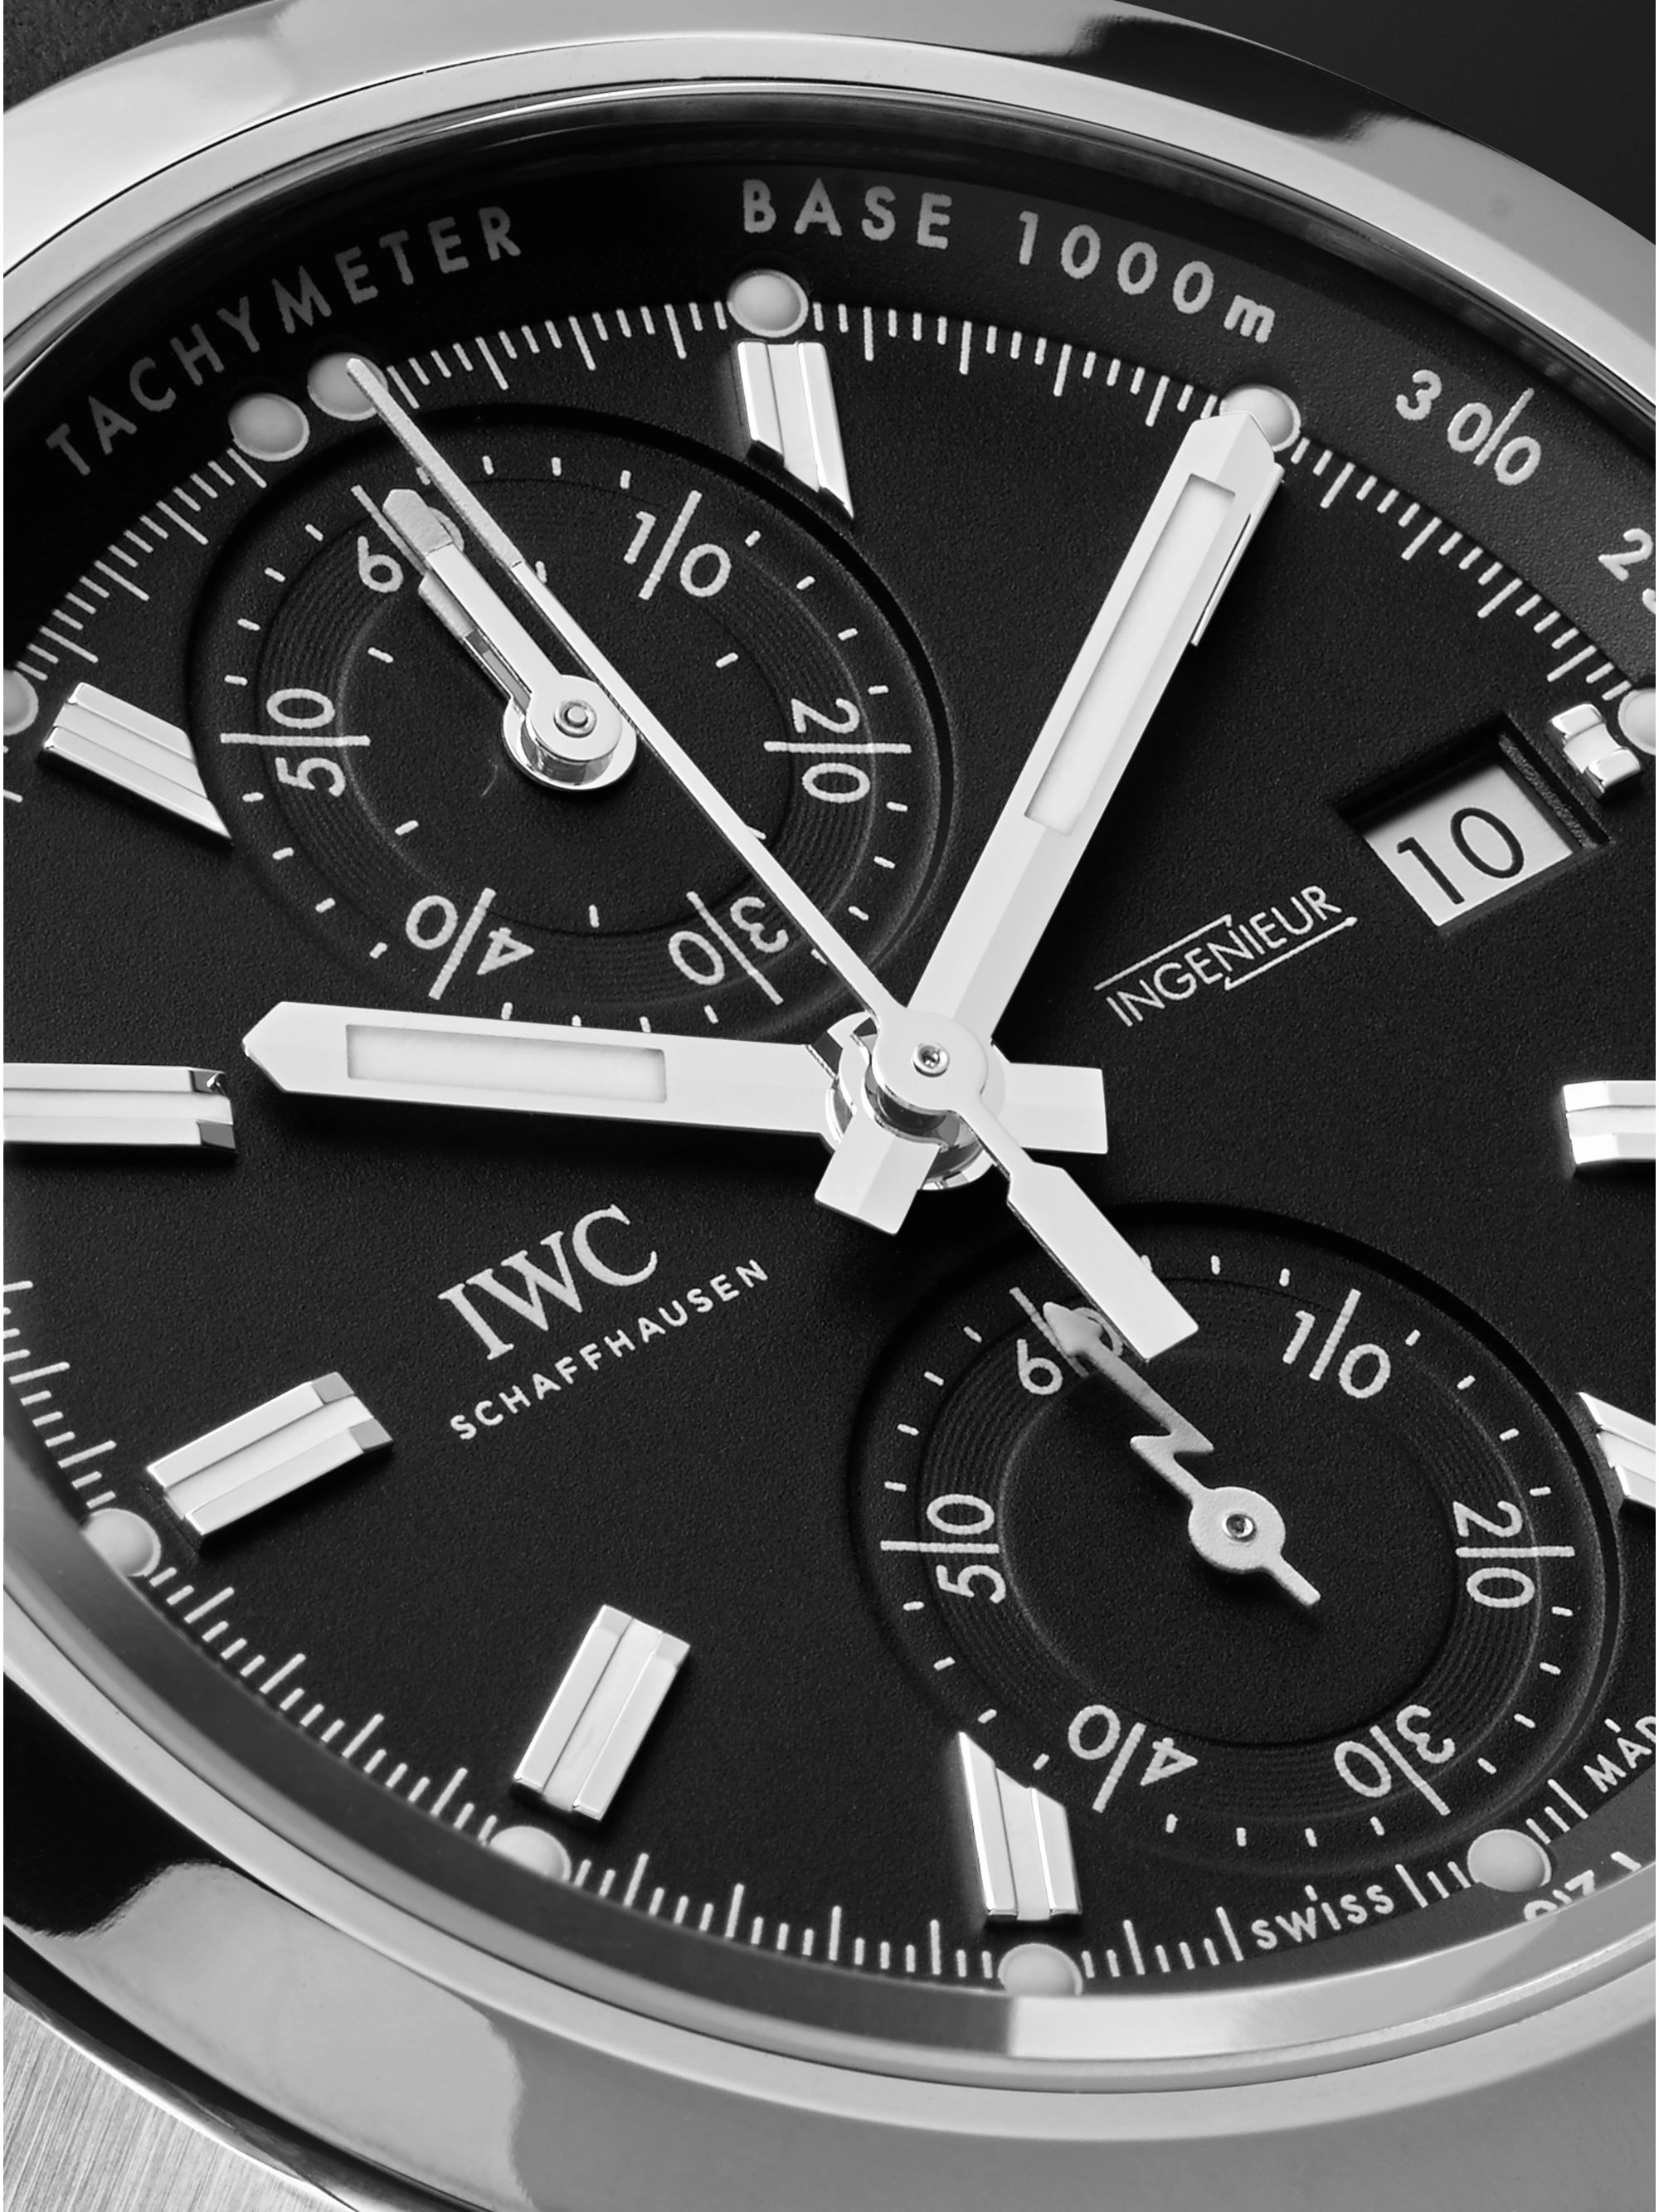 IWC SCHAFFHAUSEN Ingenieur Sport Automatic Chronograph 44mm Titanium and Leather Watch, Ref. No. IW380901